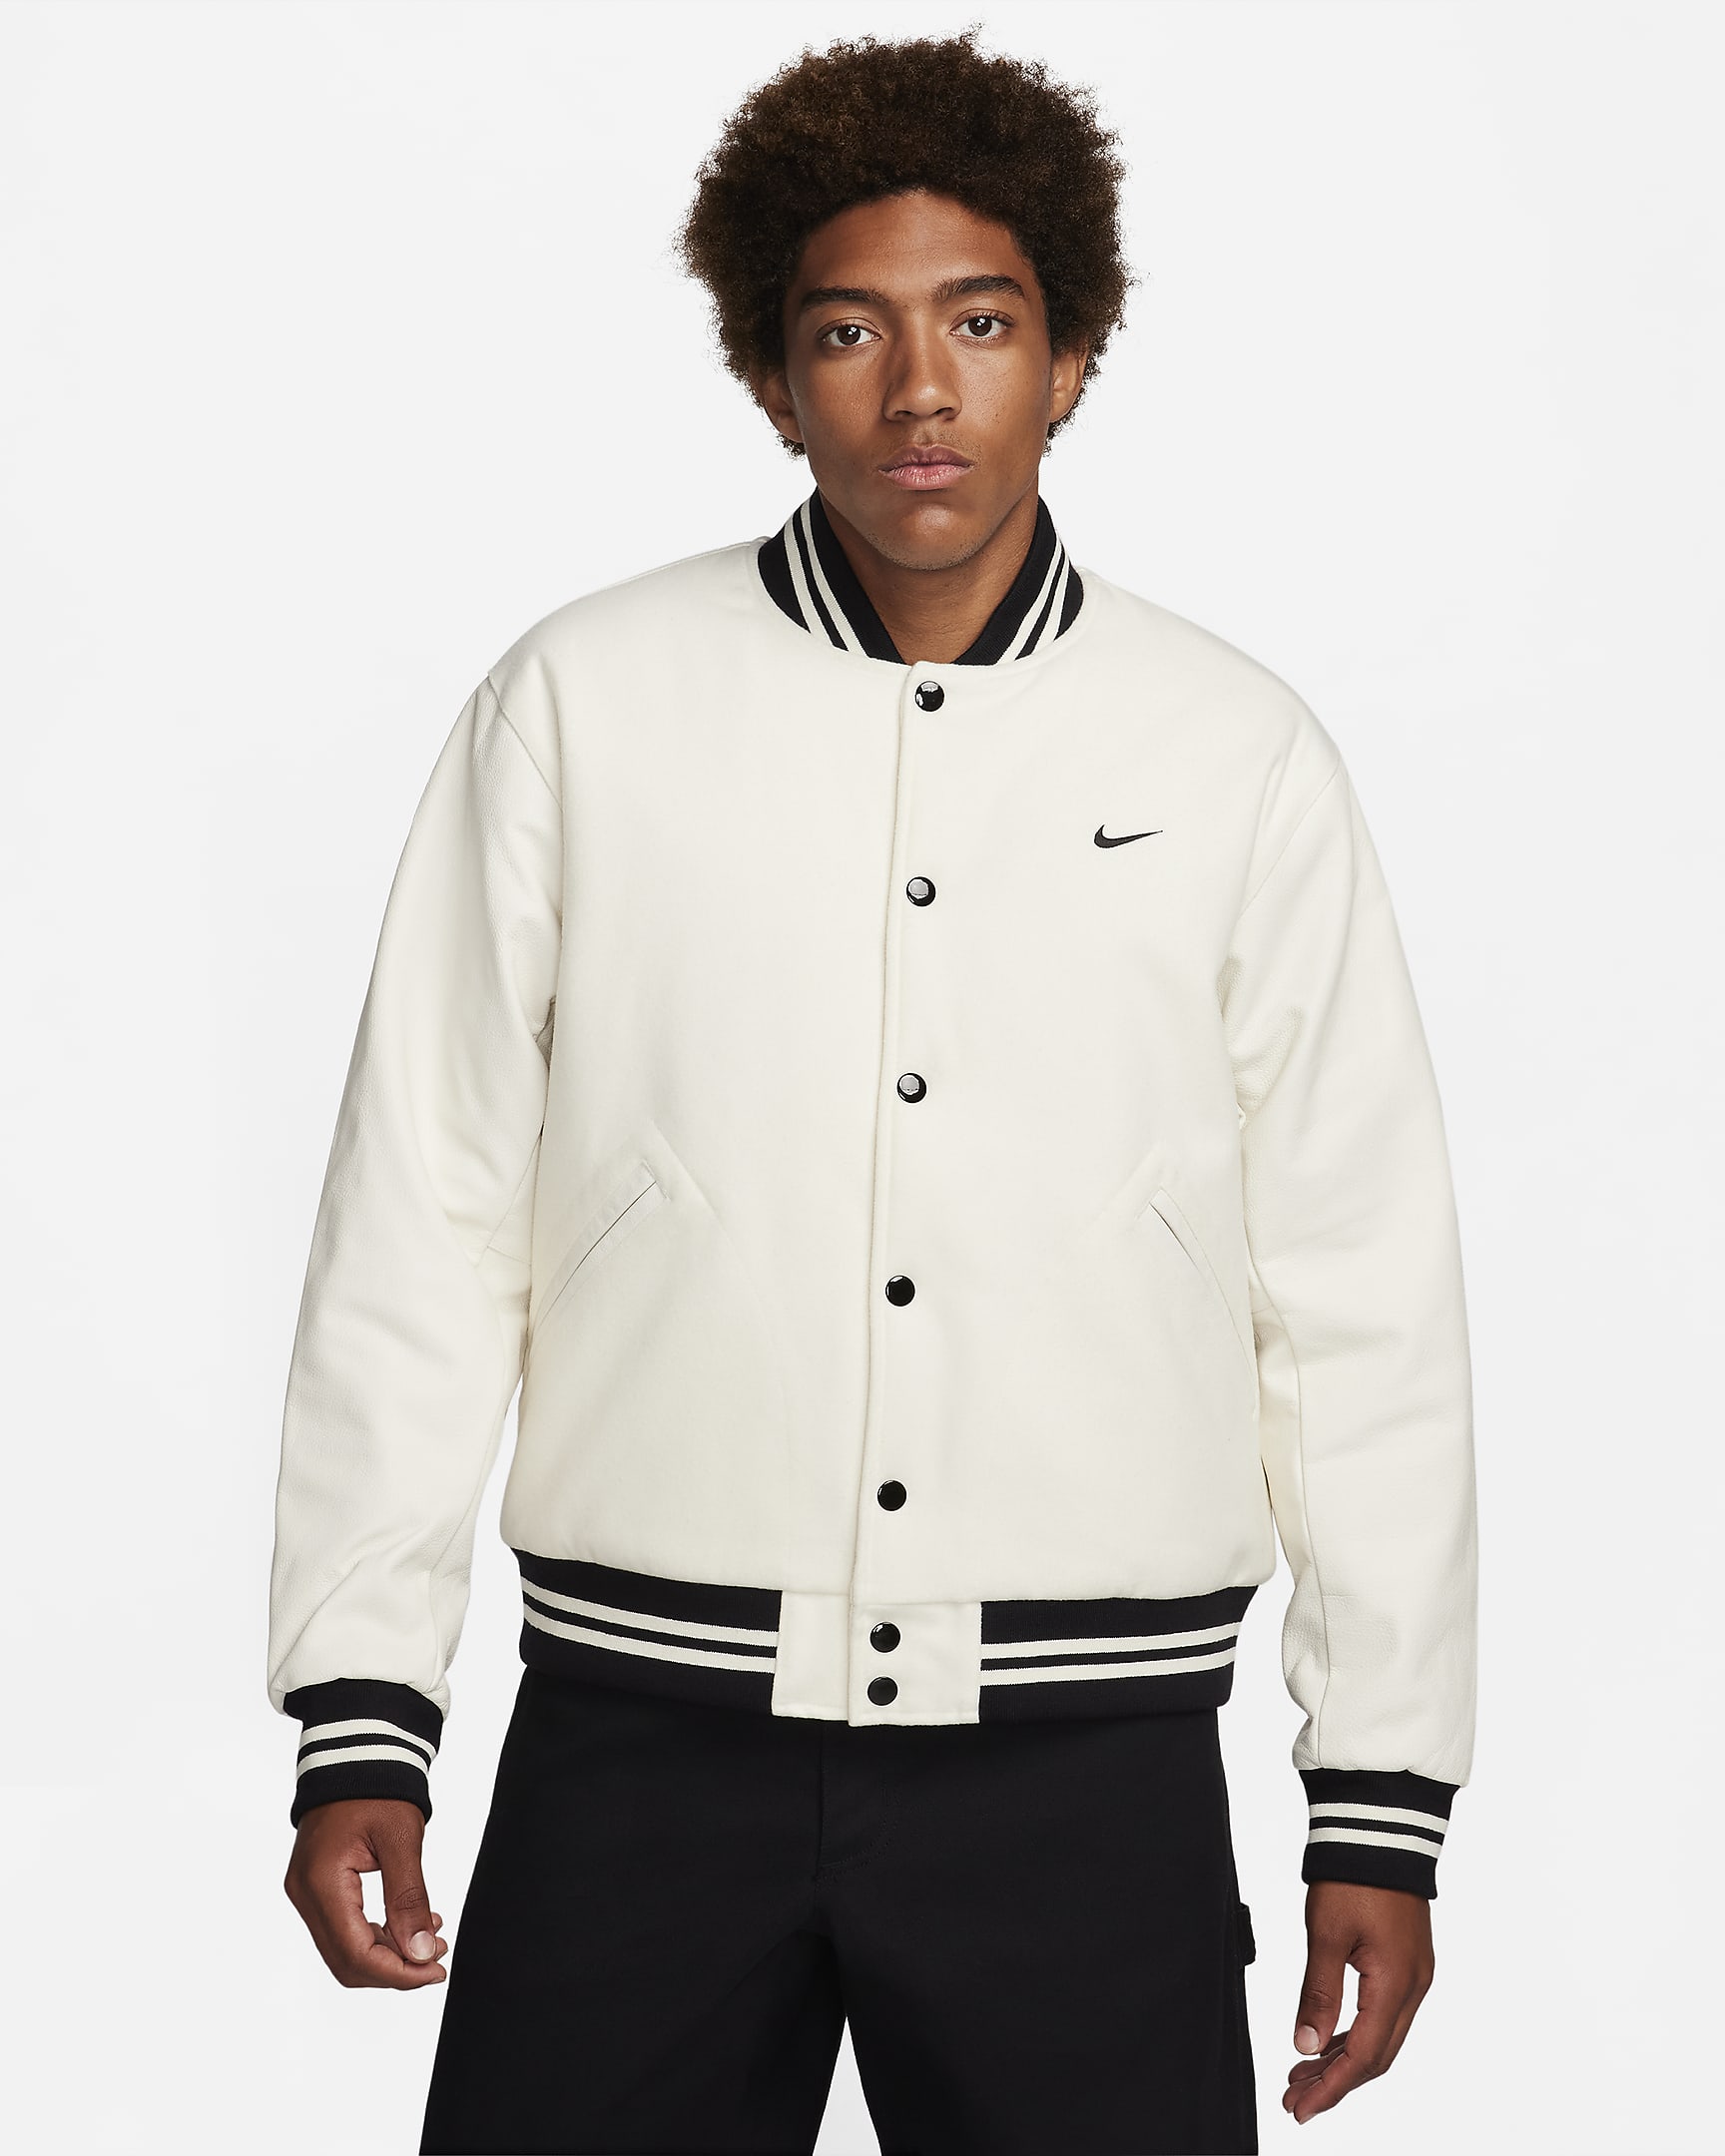 Nike Authentics Men's Varsity Jacket. Nike IL